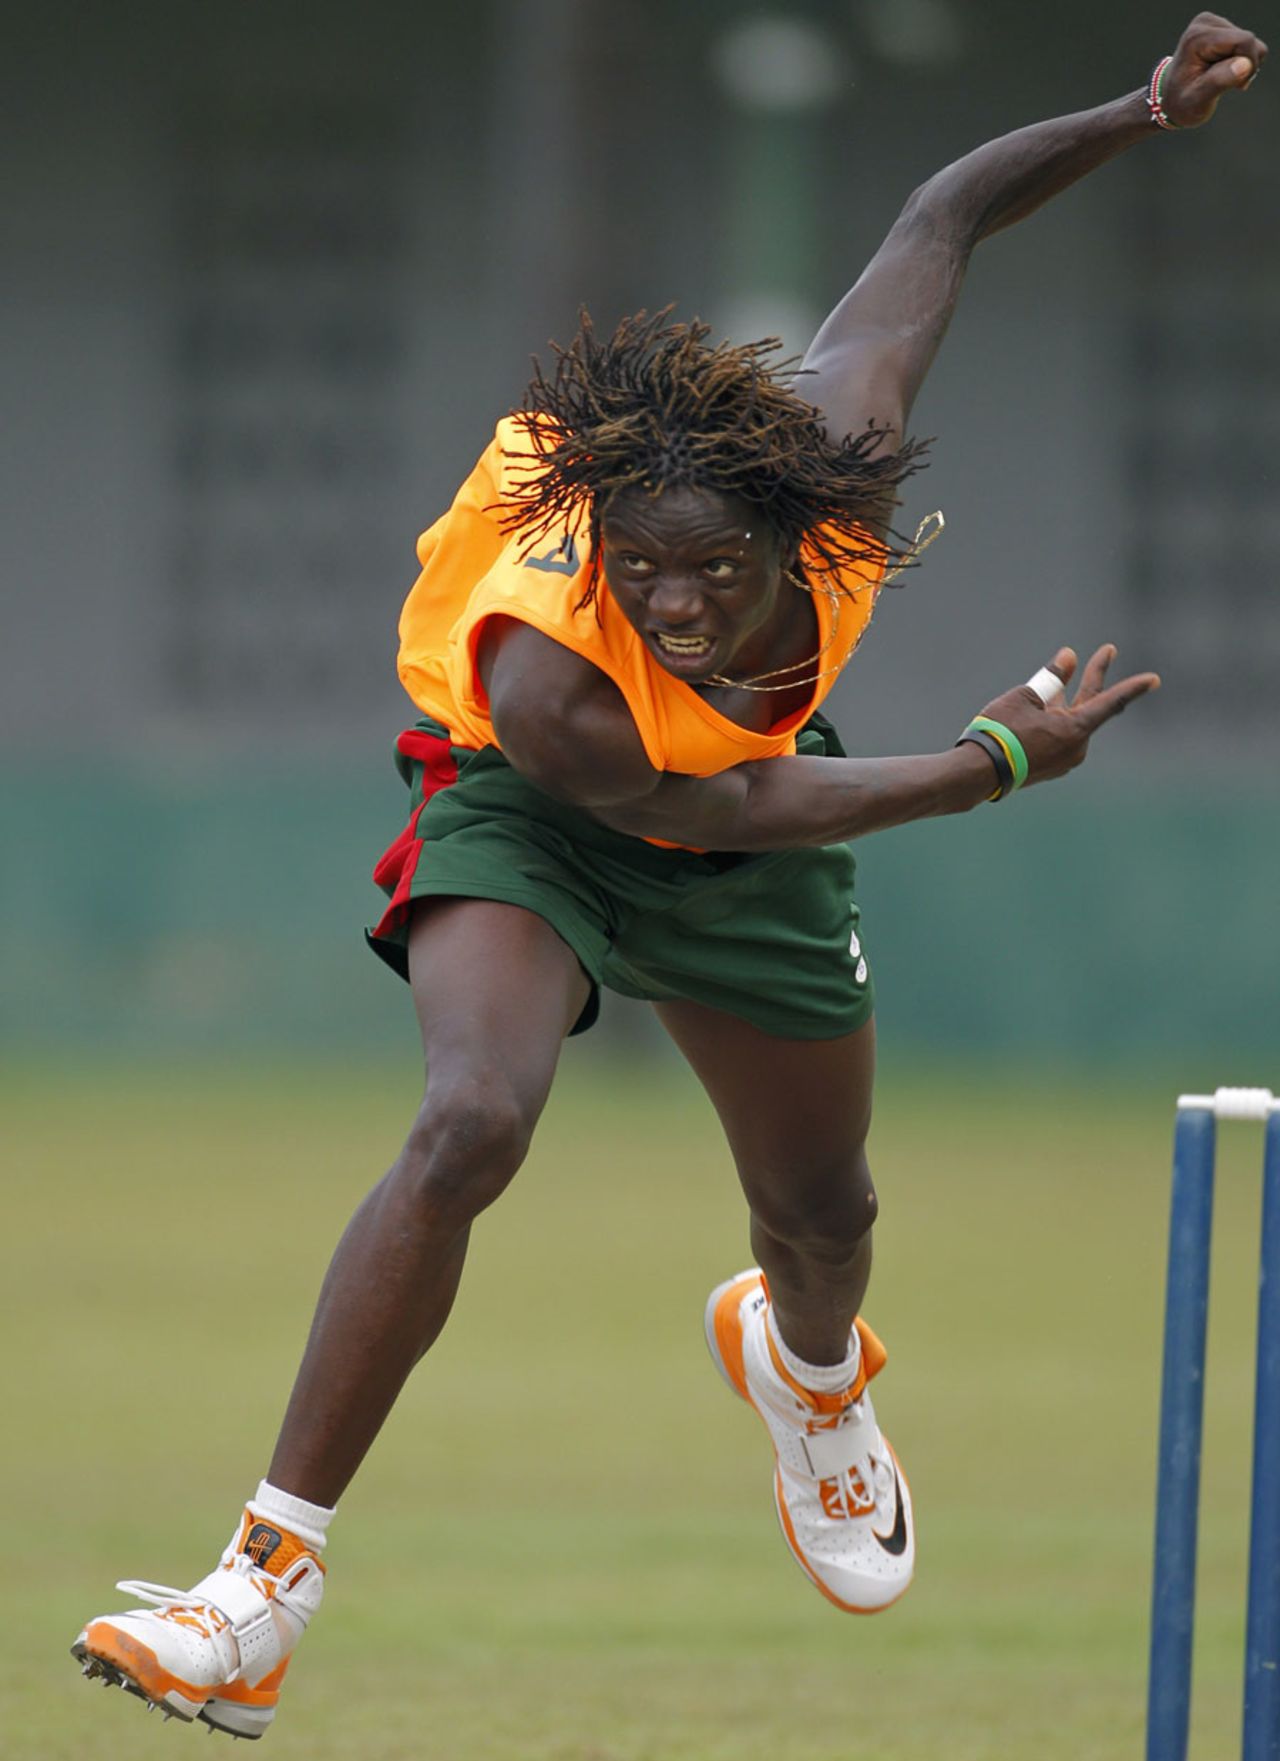 Nehemiah Odhiambo bowls during a training session, Colombo, February 25, 2011